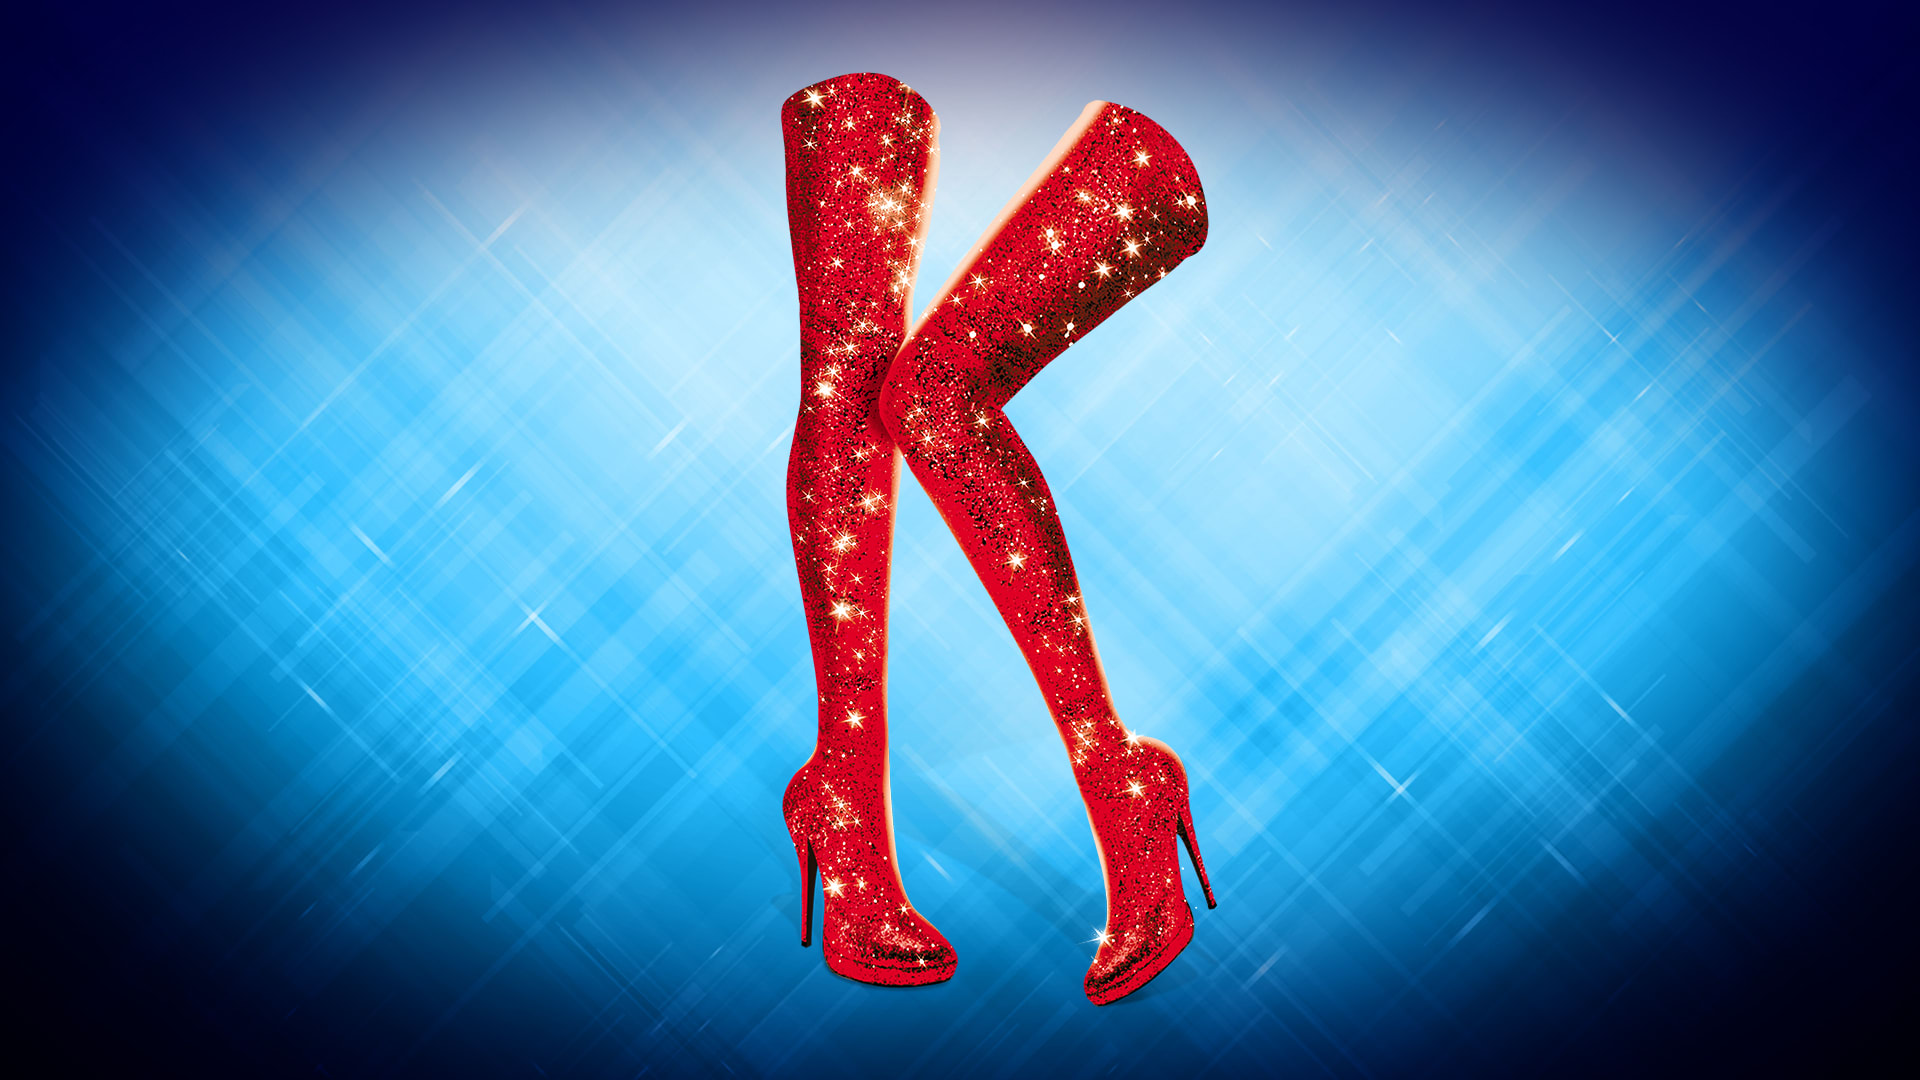 Tops Kinky Boots Tickets Princess Theatre Torquay In Torquay Atg